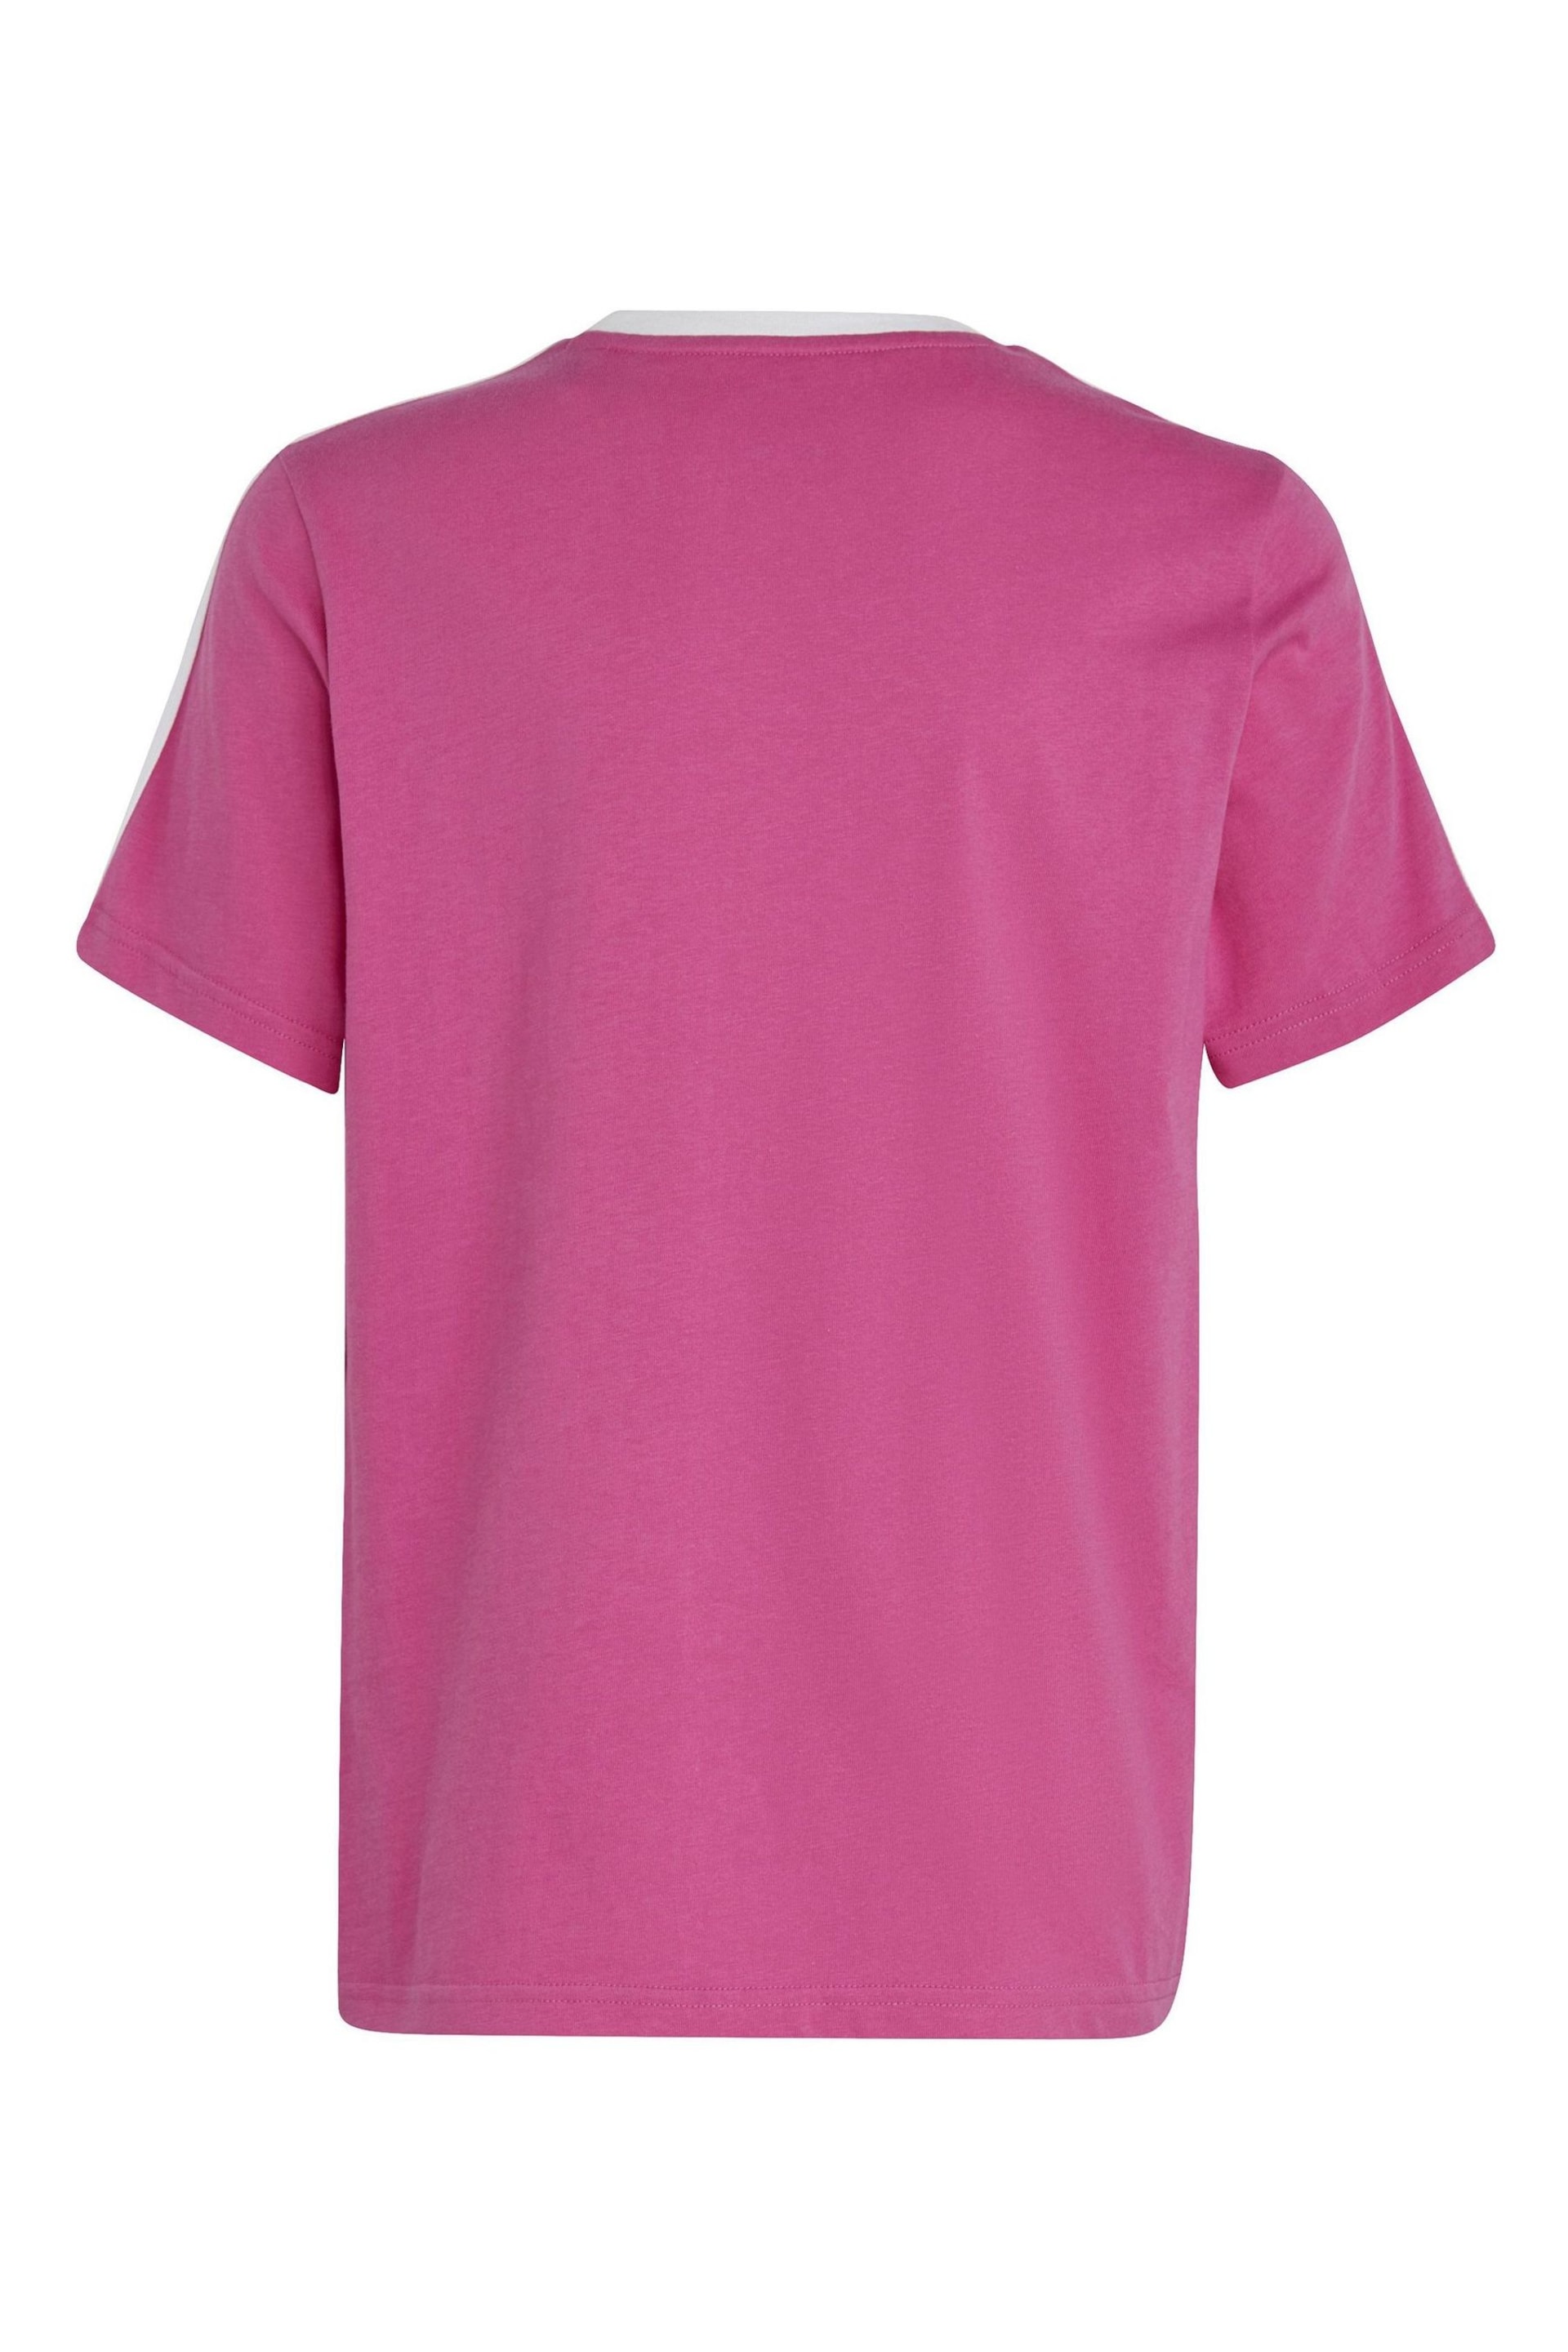 adidas Pink Boyfriend Loose Fit Sportswear Essentials 3-Stripes Cotton T-Shirt - Image 5 of 8